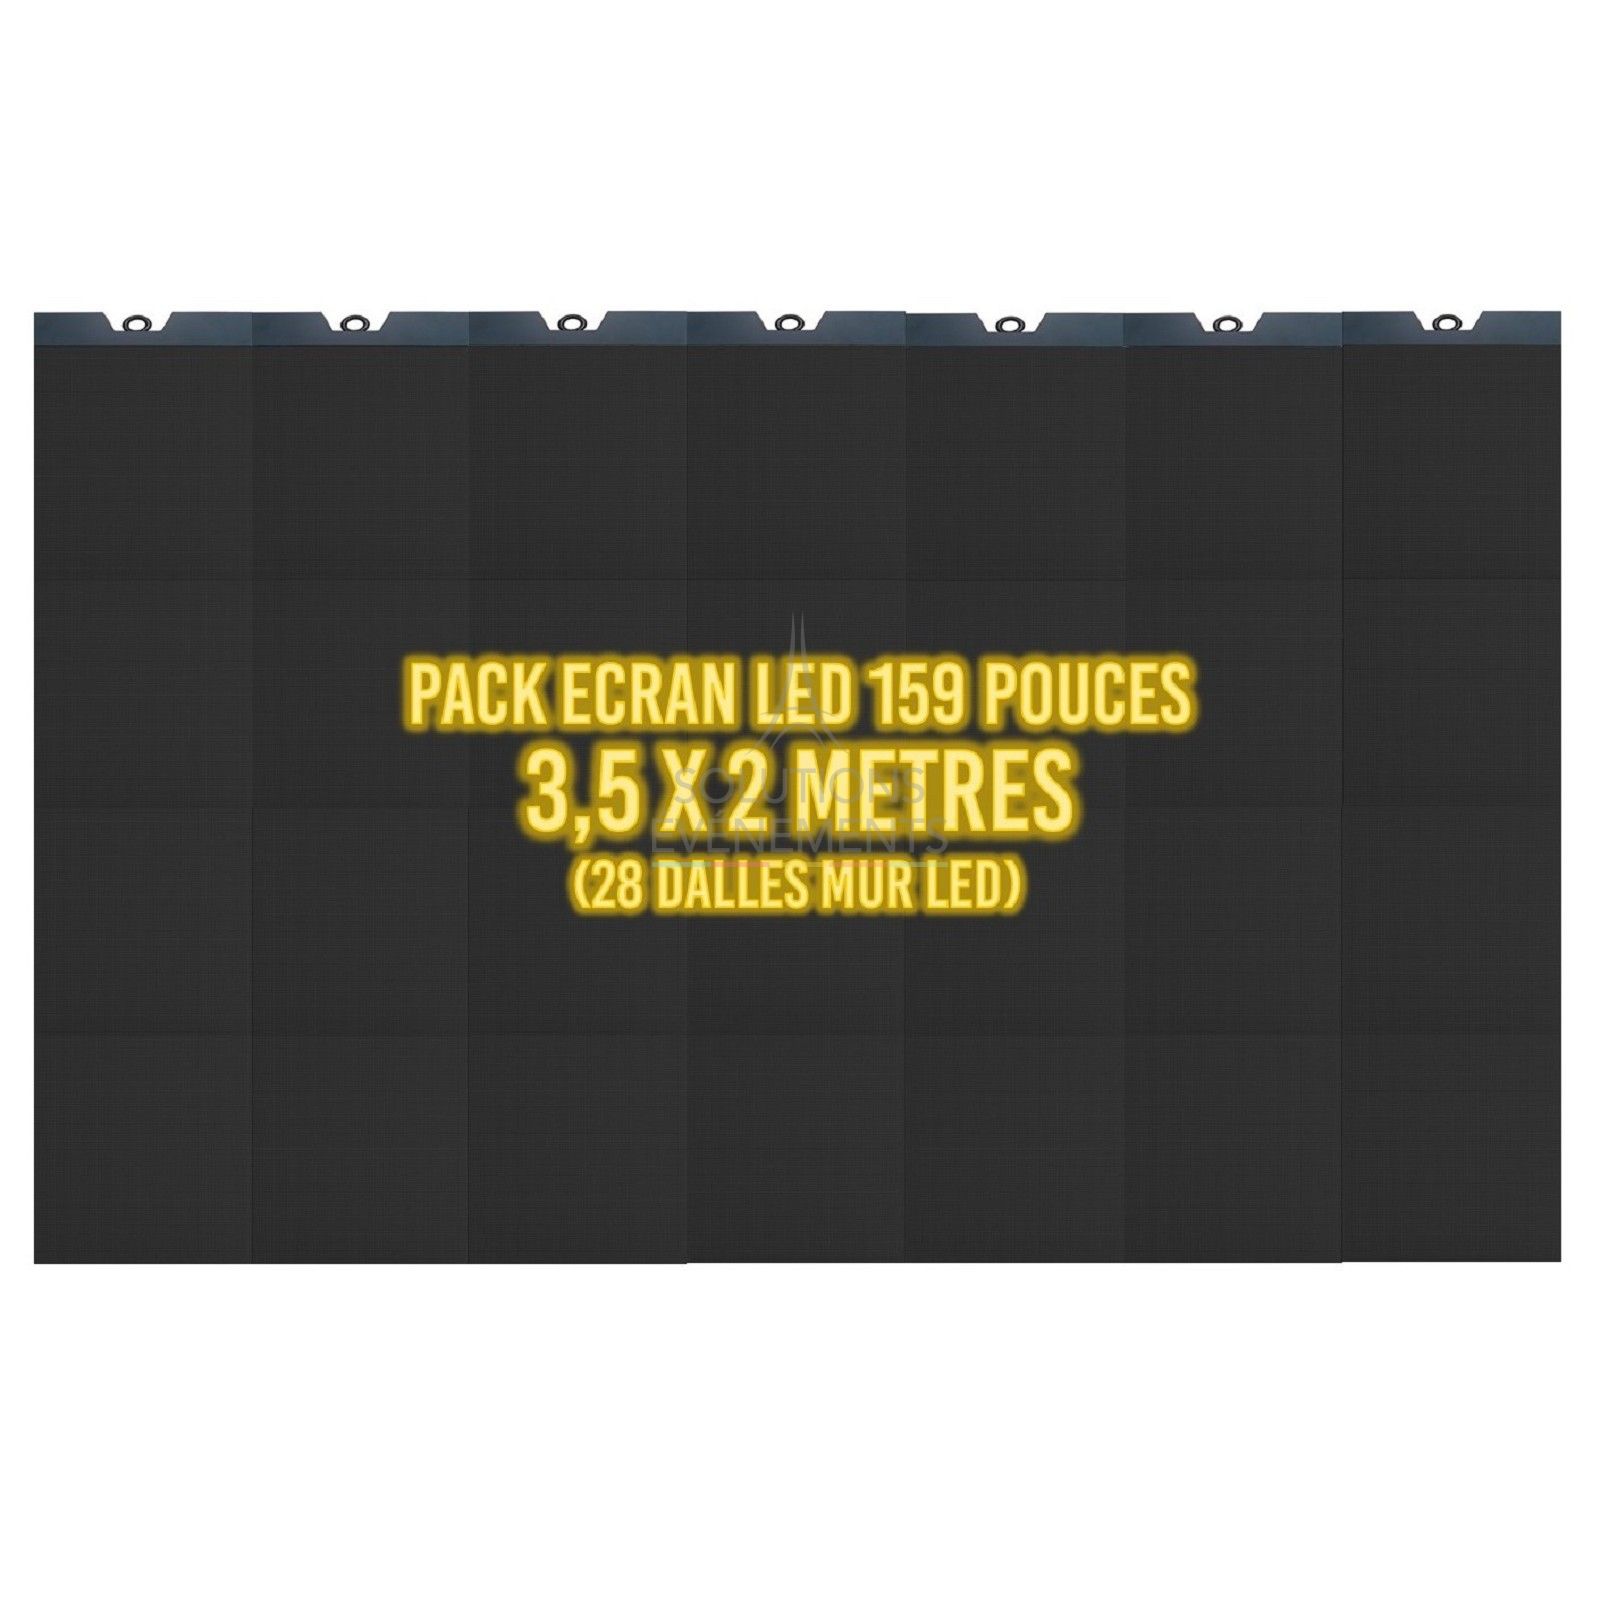 Location Ecran video de 3,5x2 metres avec 28 dalles led pitch 3.9mm